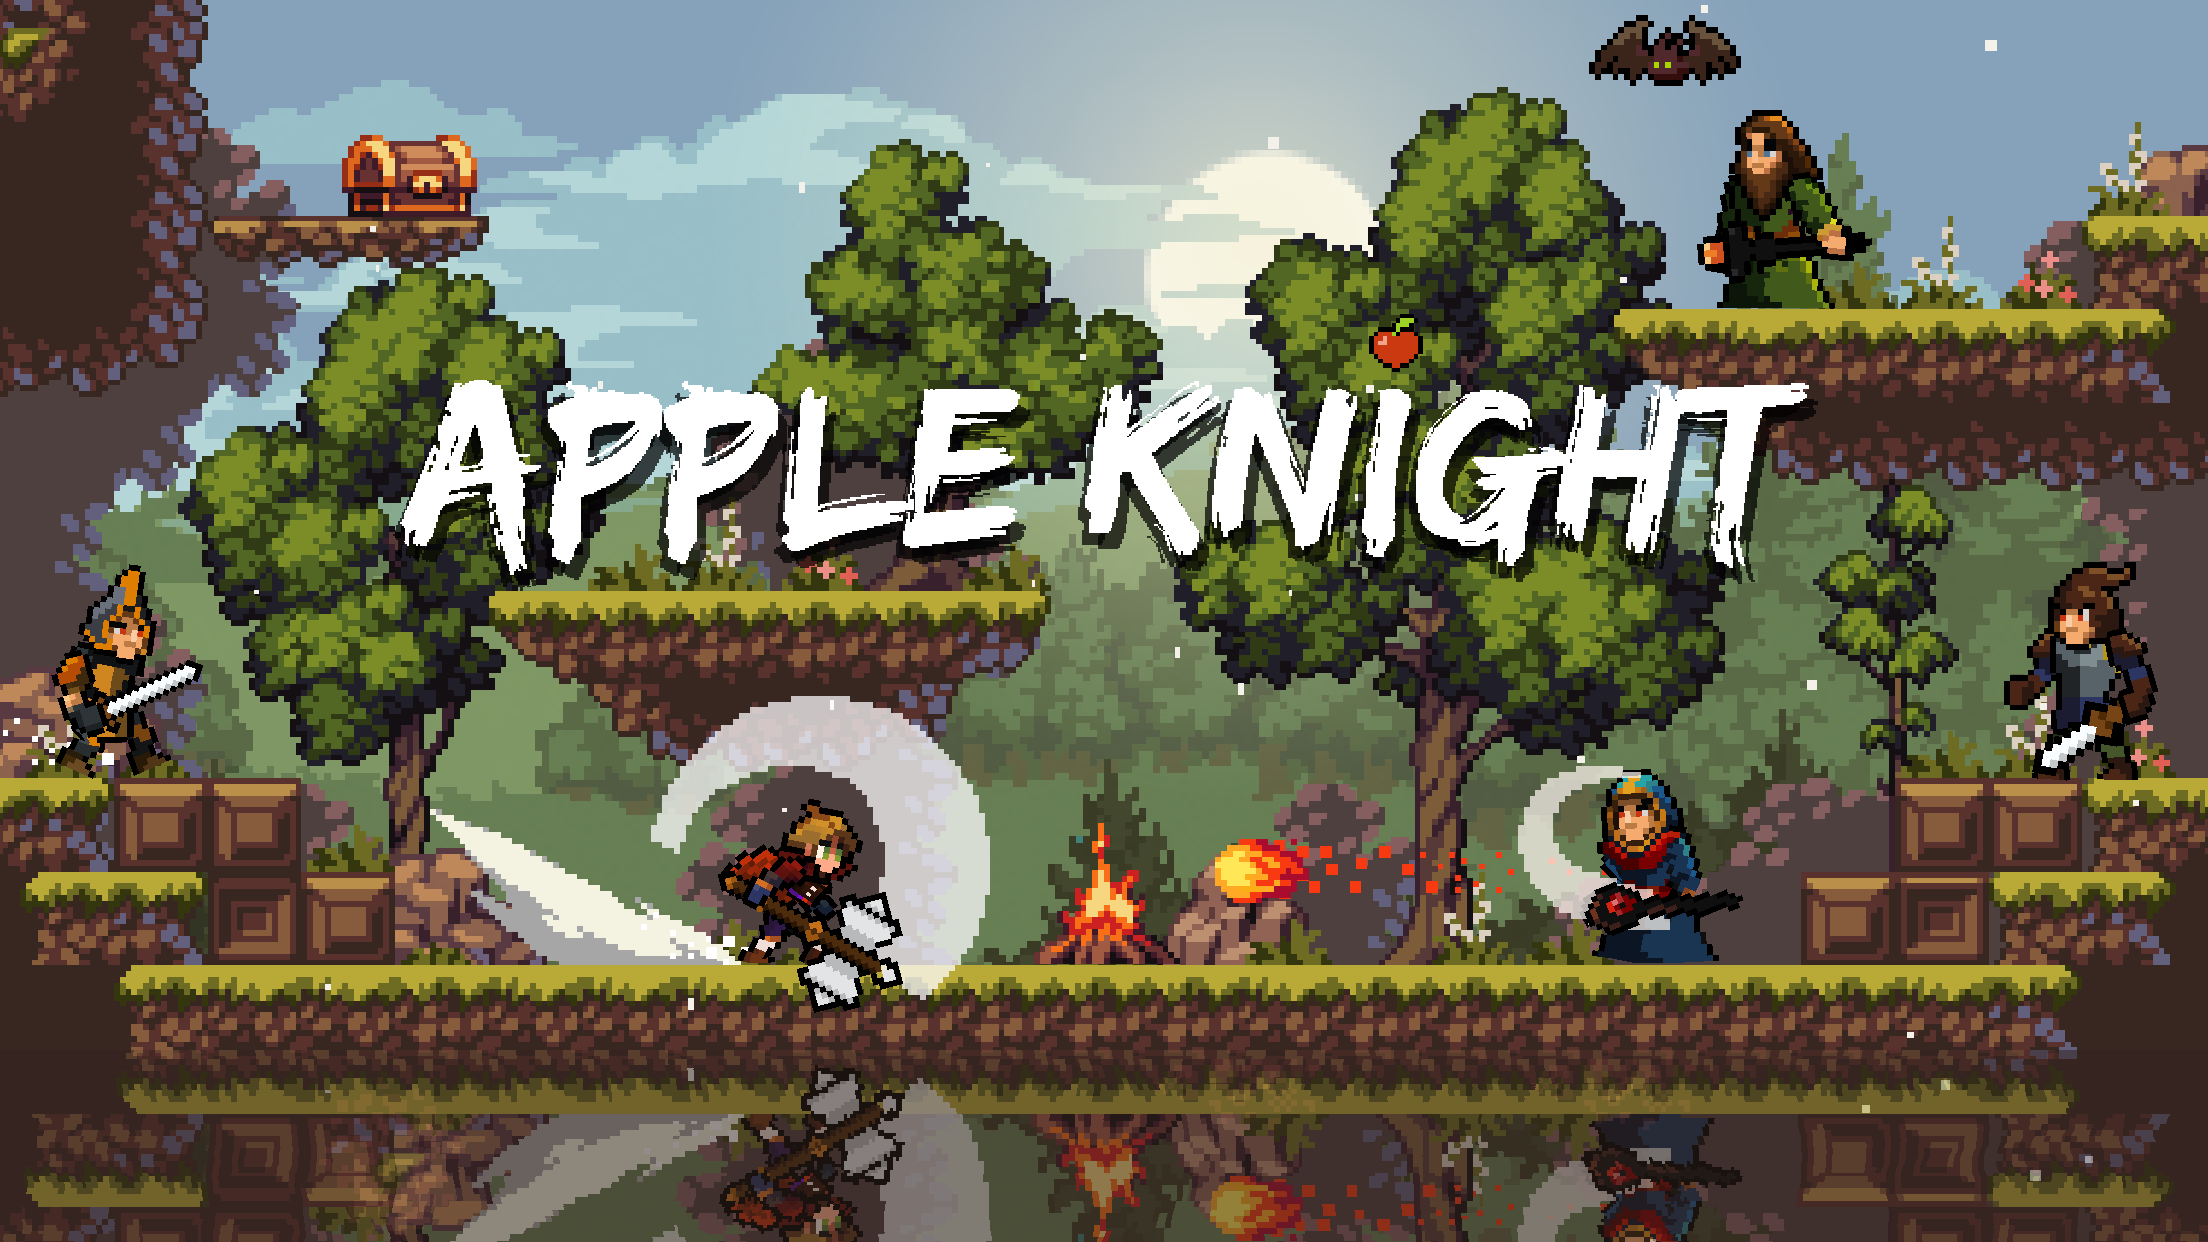 Apple knight : world 2 - level 8 secret chests 